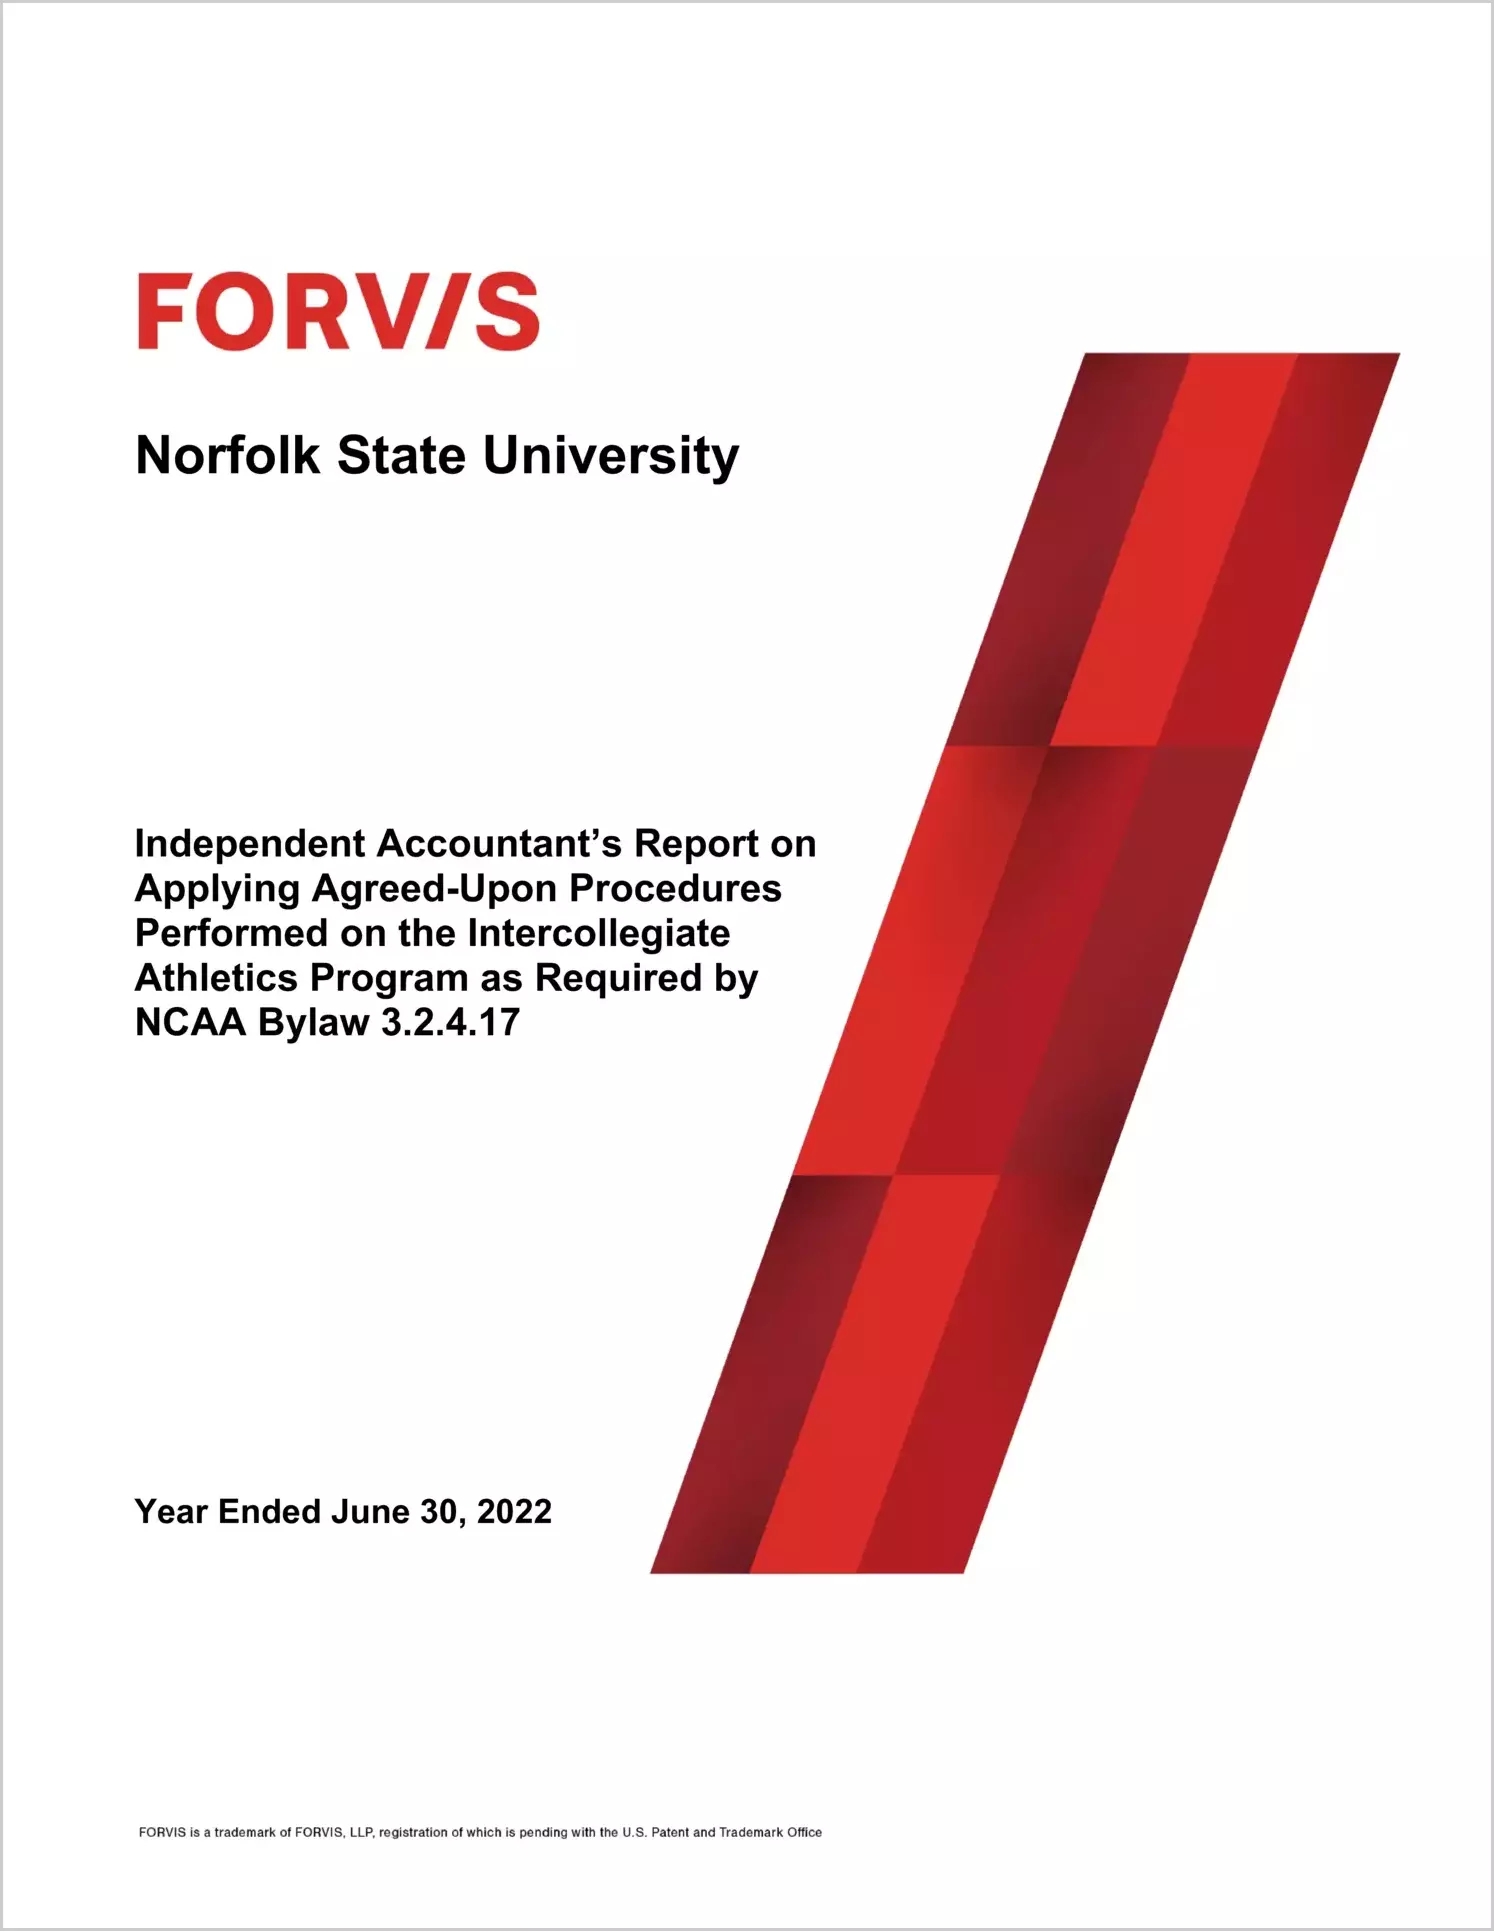 Norfolk State University Intercollegiate Athletics Programs for the year ended June 30, 2022